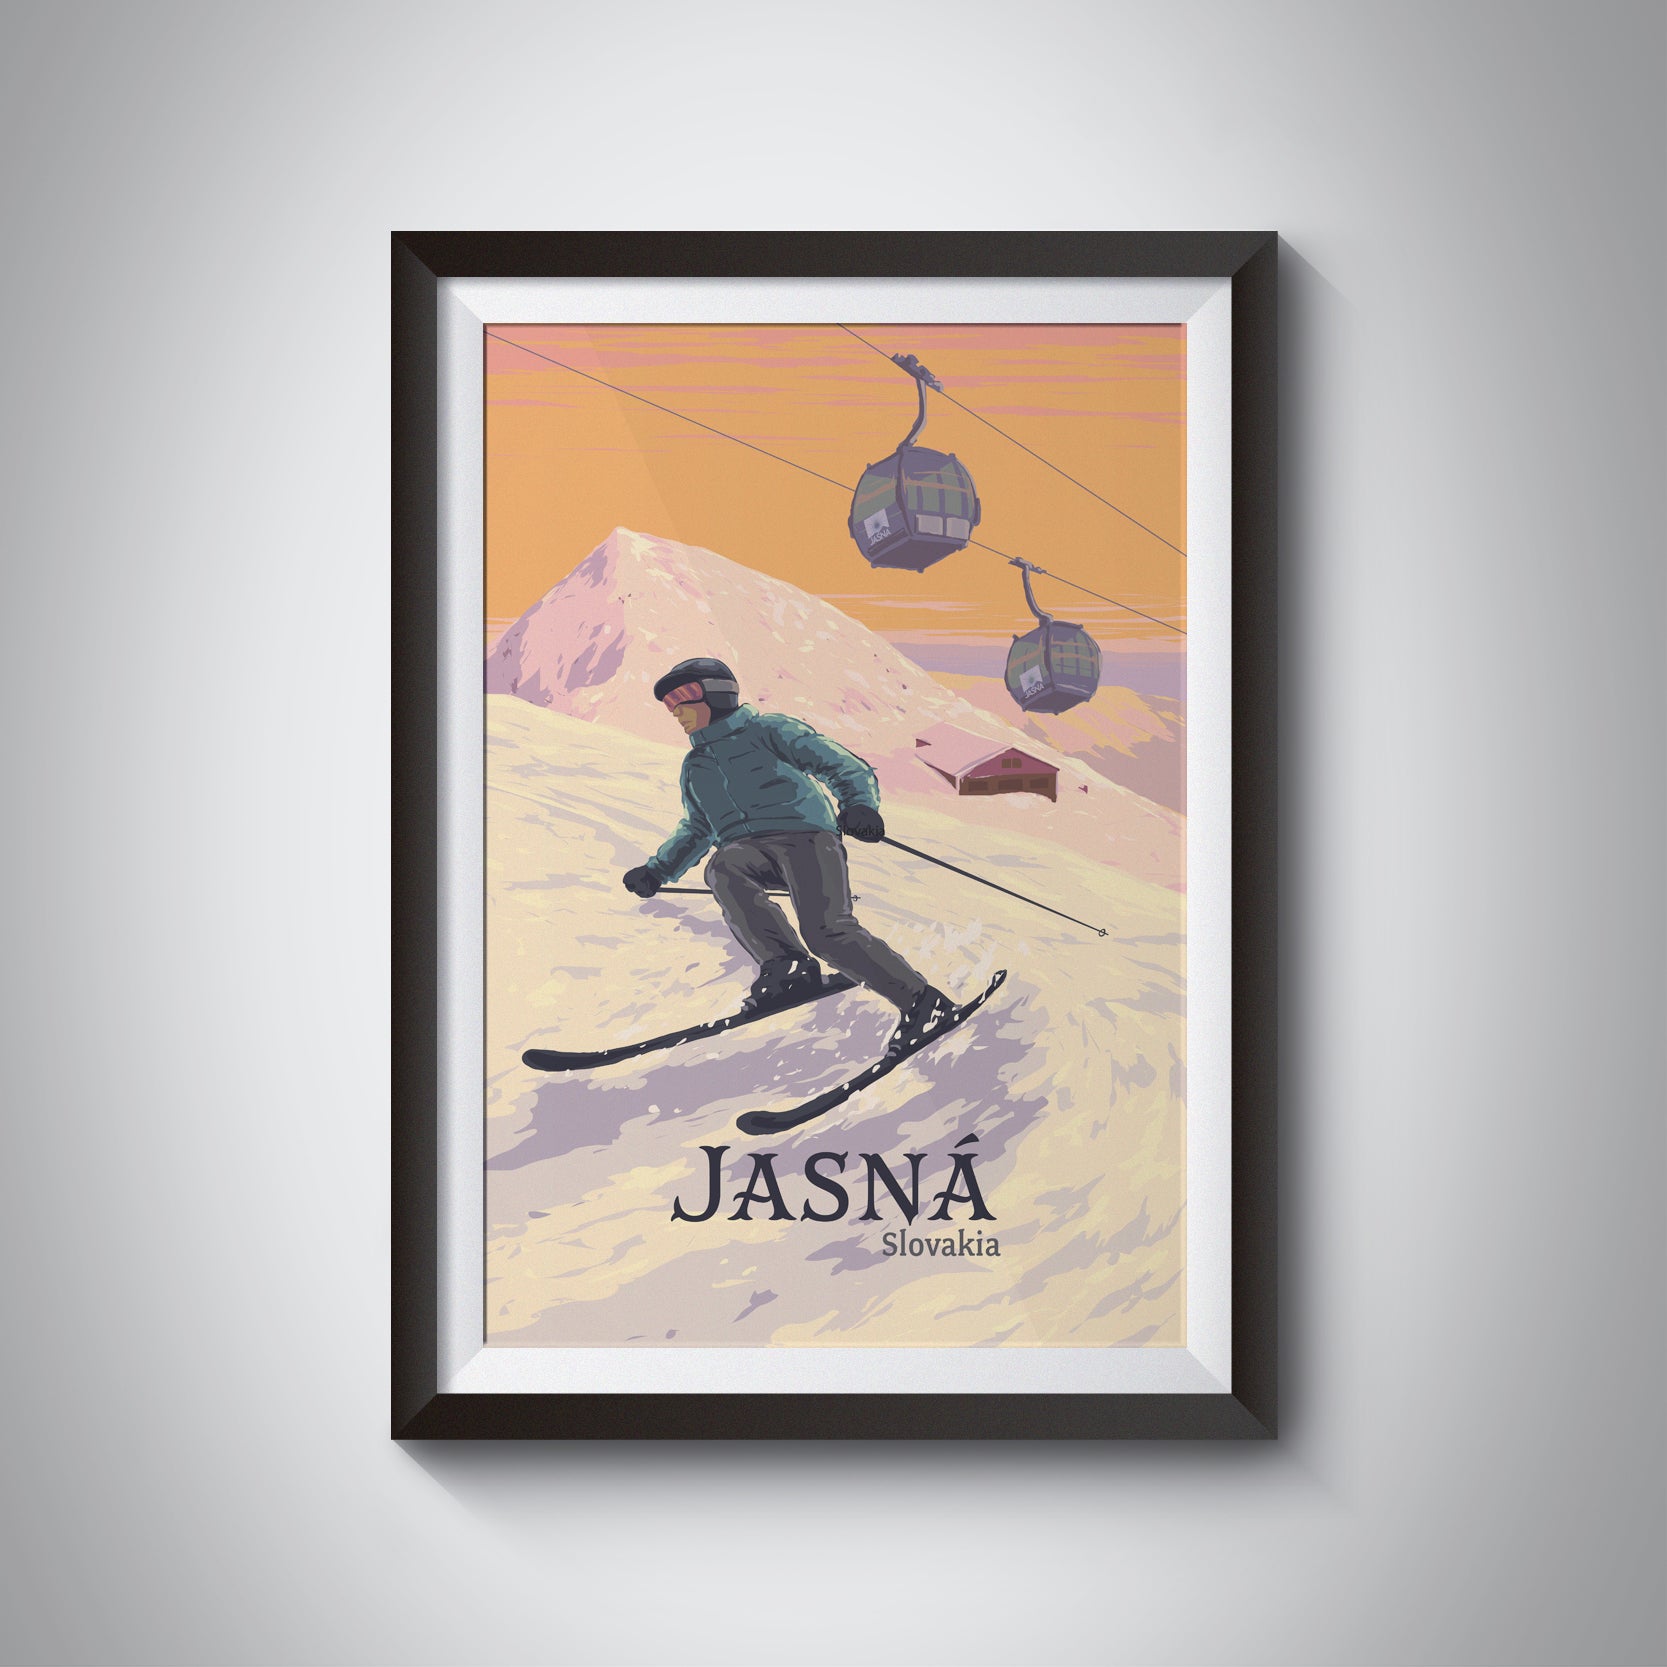 Jasna Ski Resort Slovakia Travel Poster